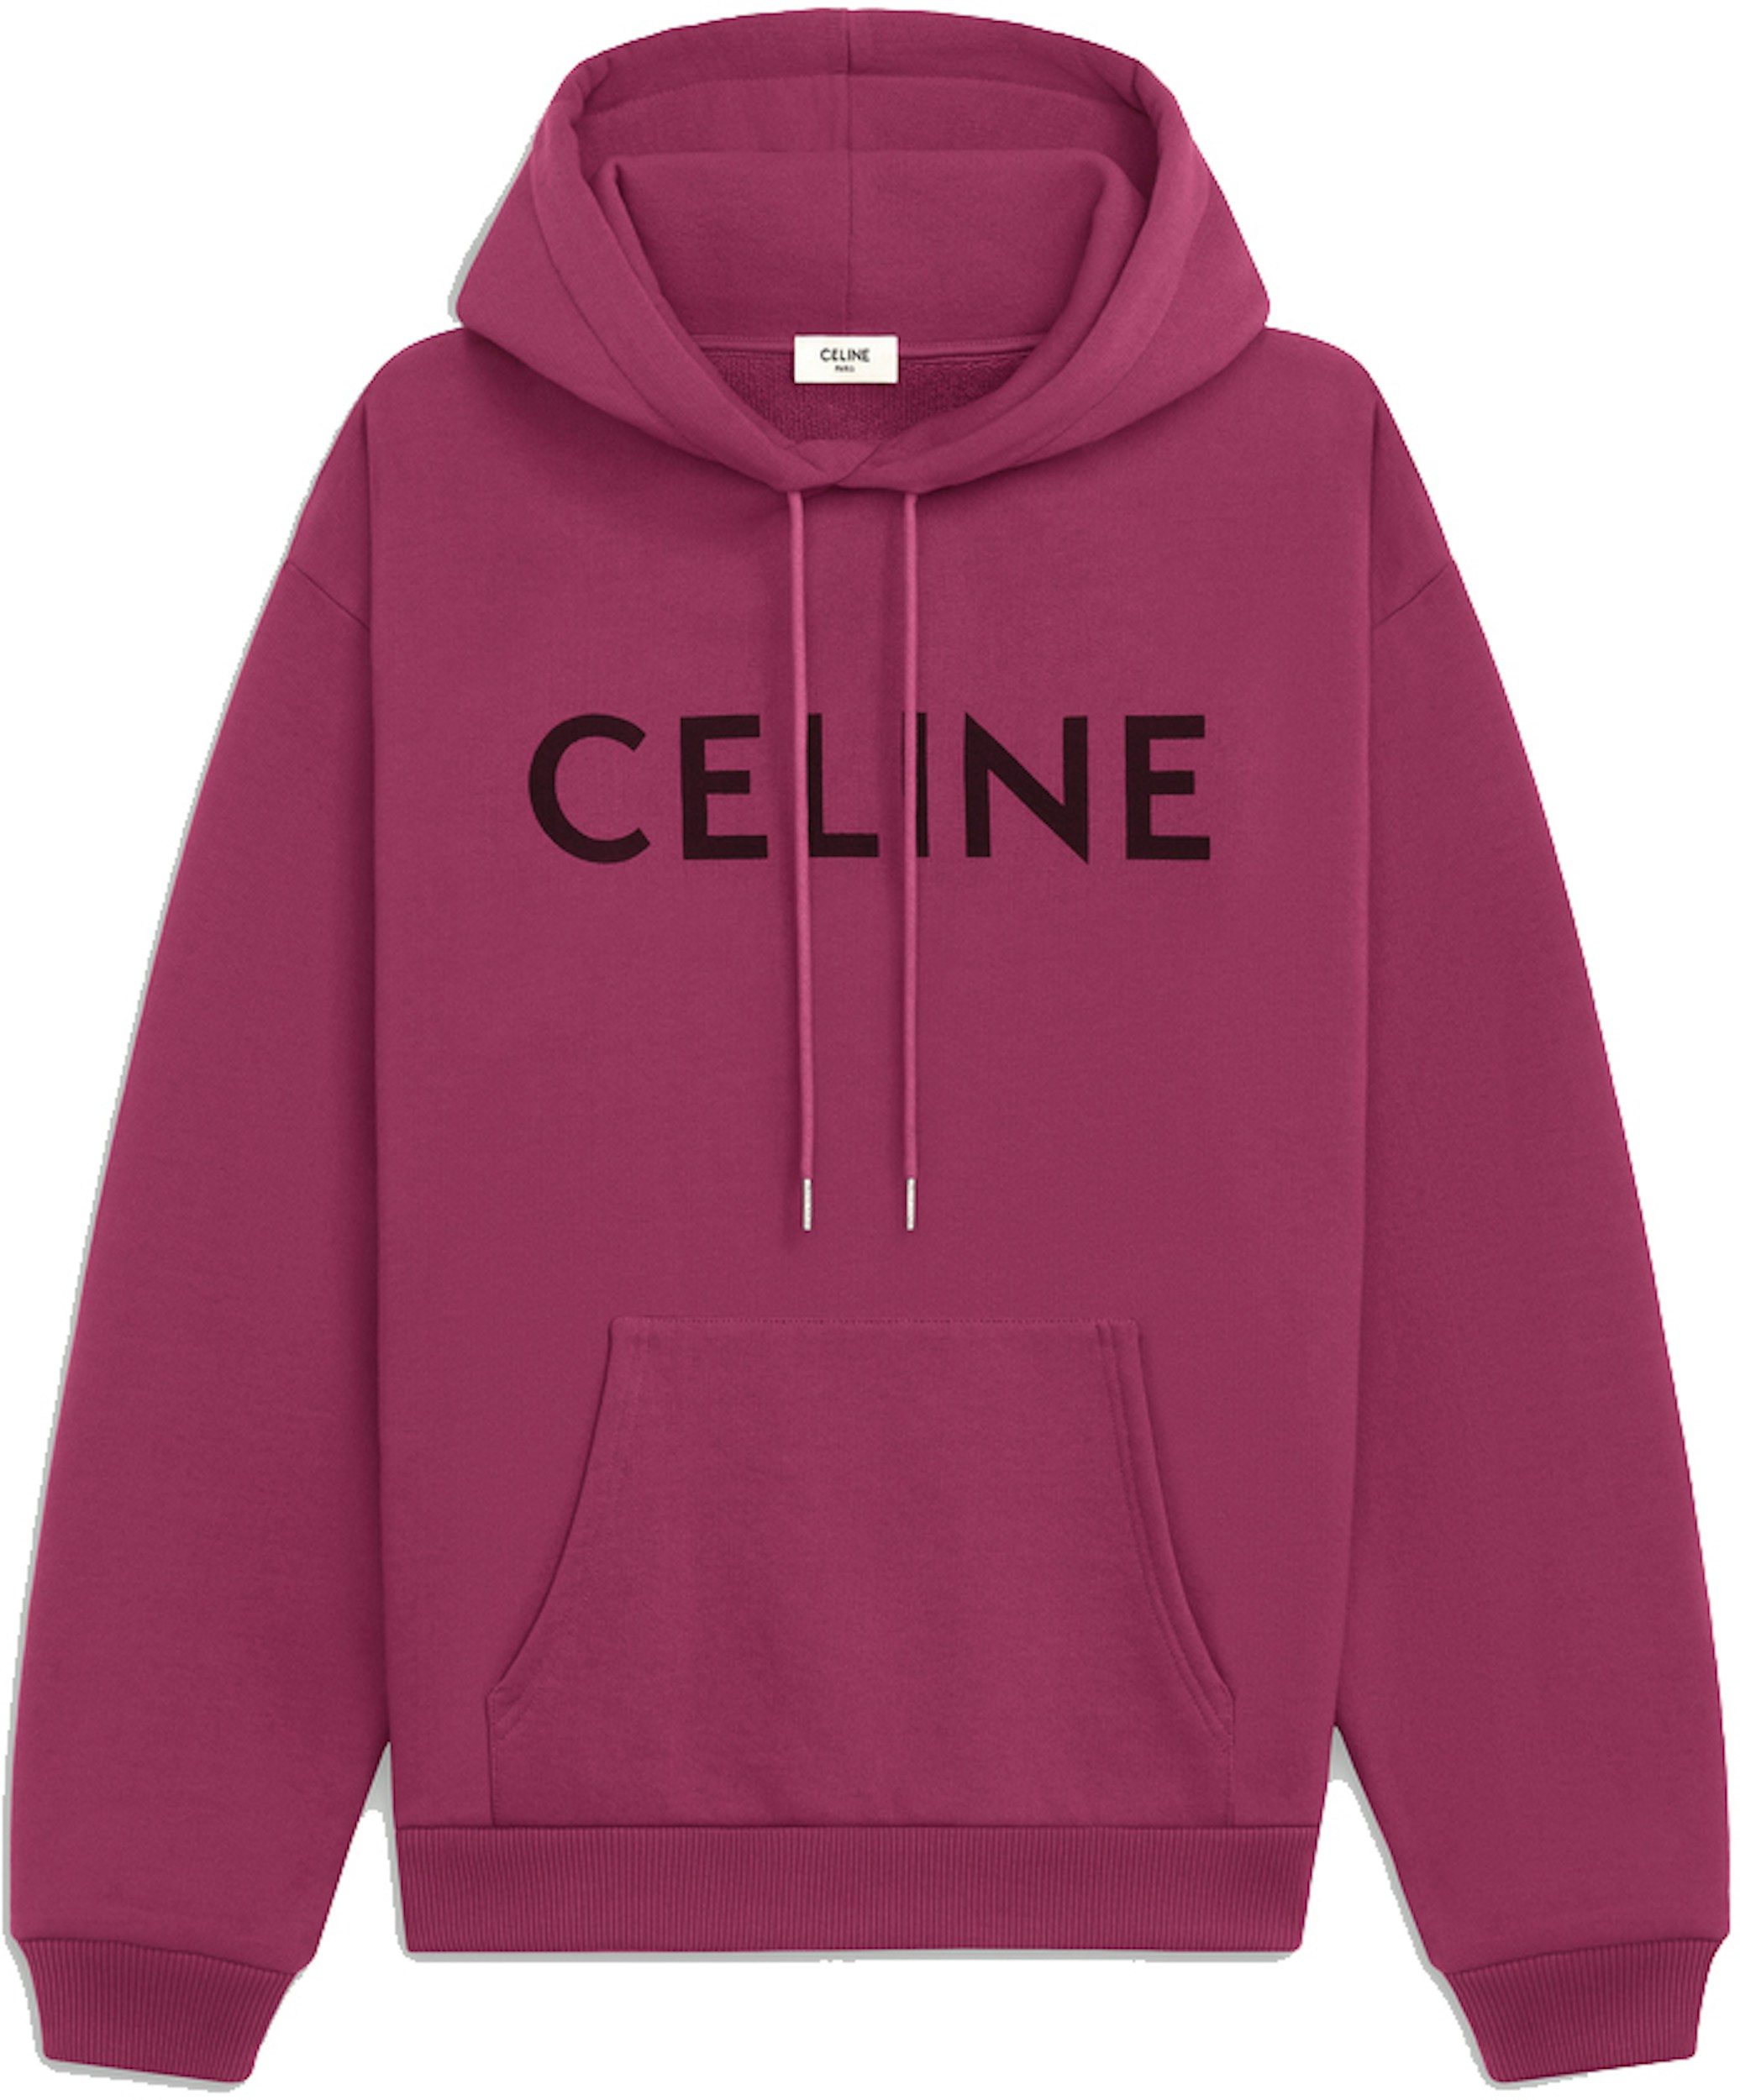 Celine Loose Cotton Sweatshirt Pink/Black